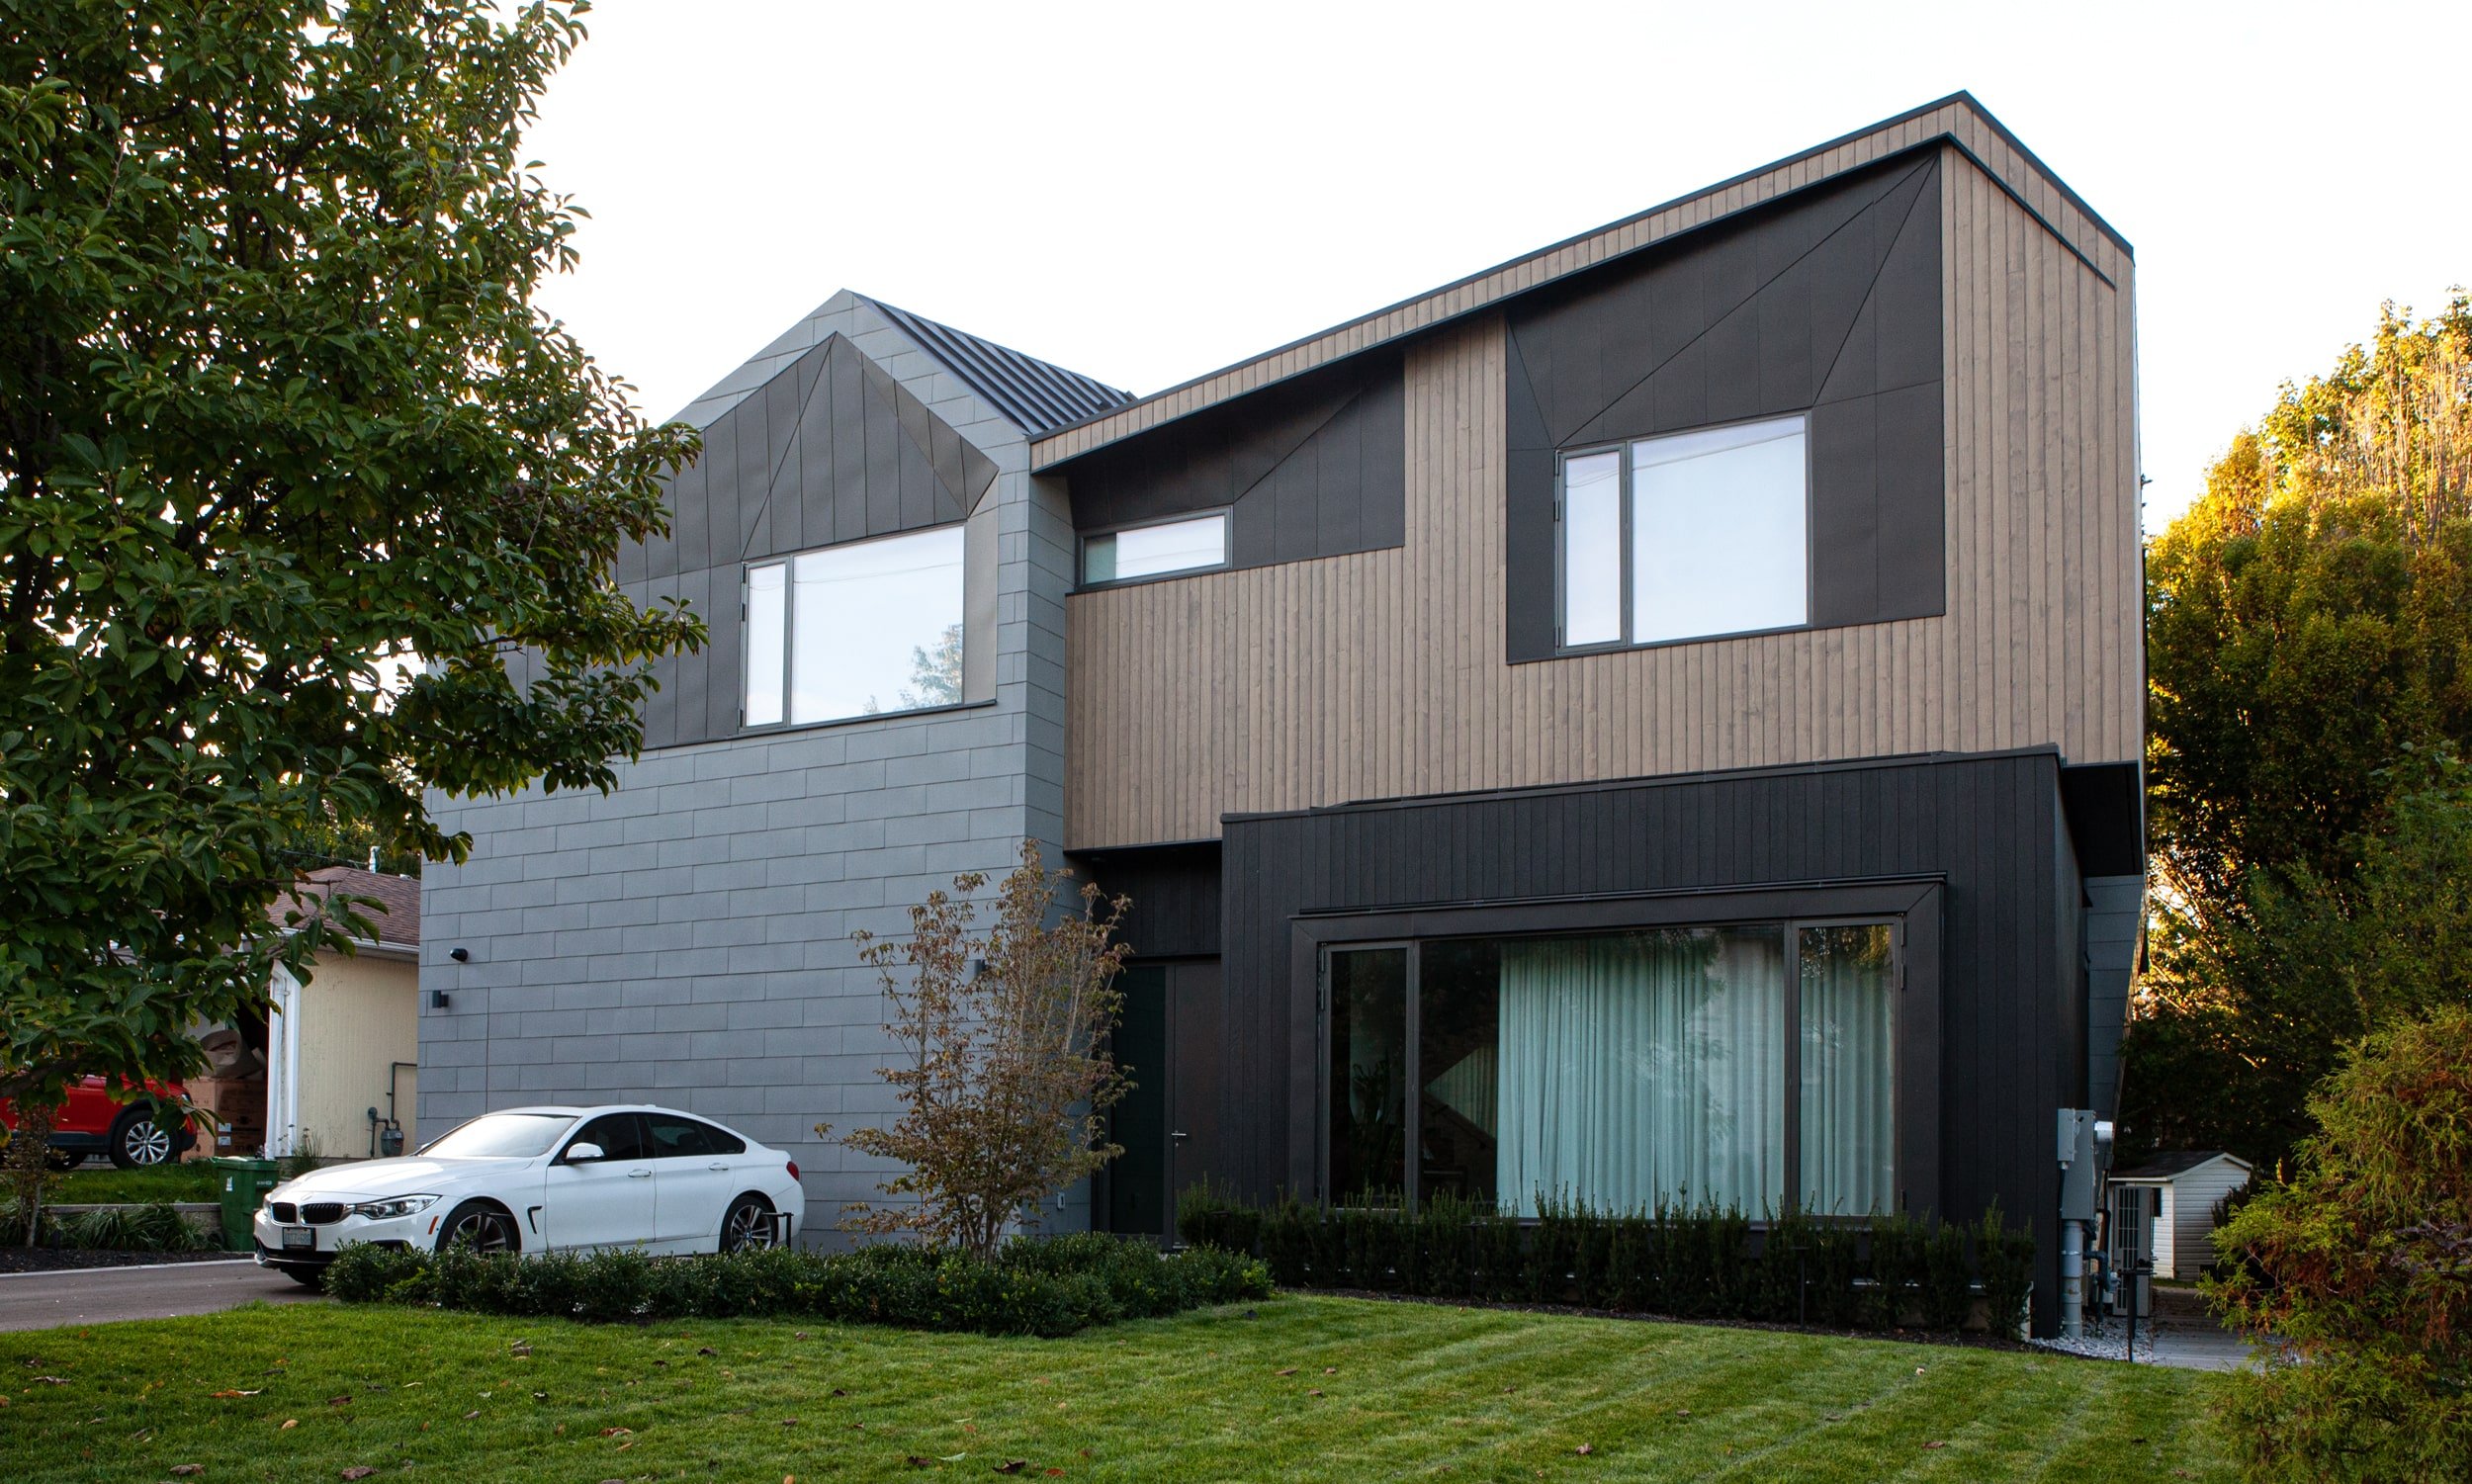 architectural designed toronto custom home front exterior with flush garage zinc cladding